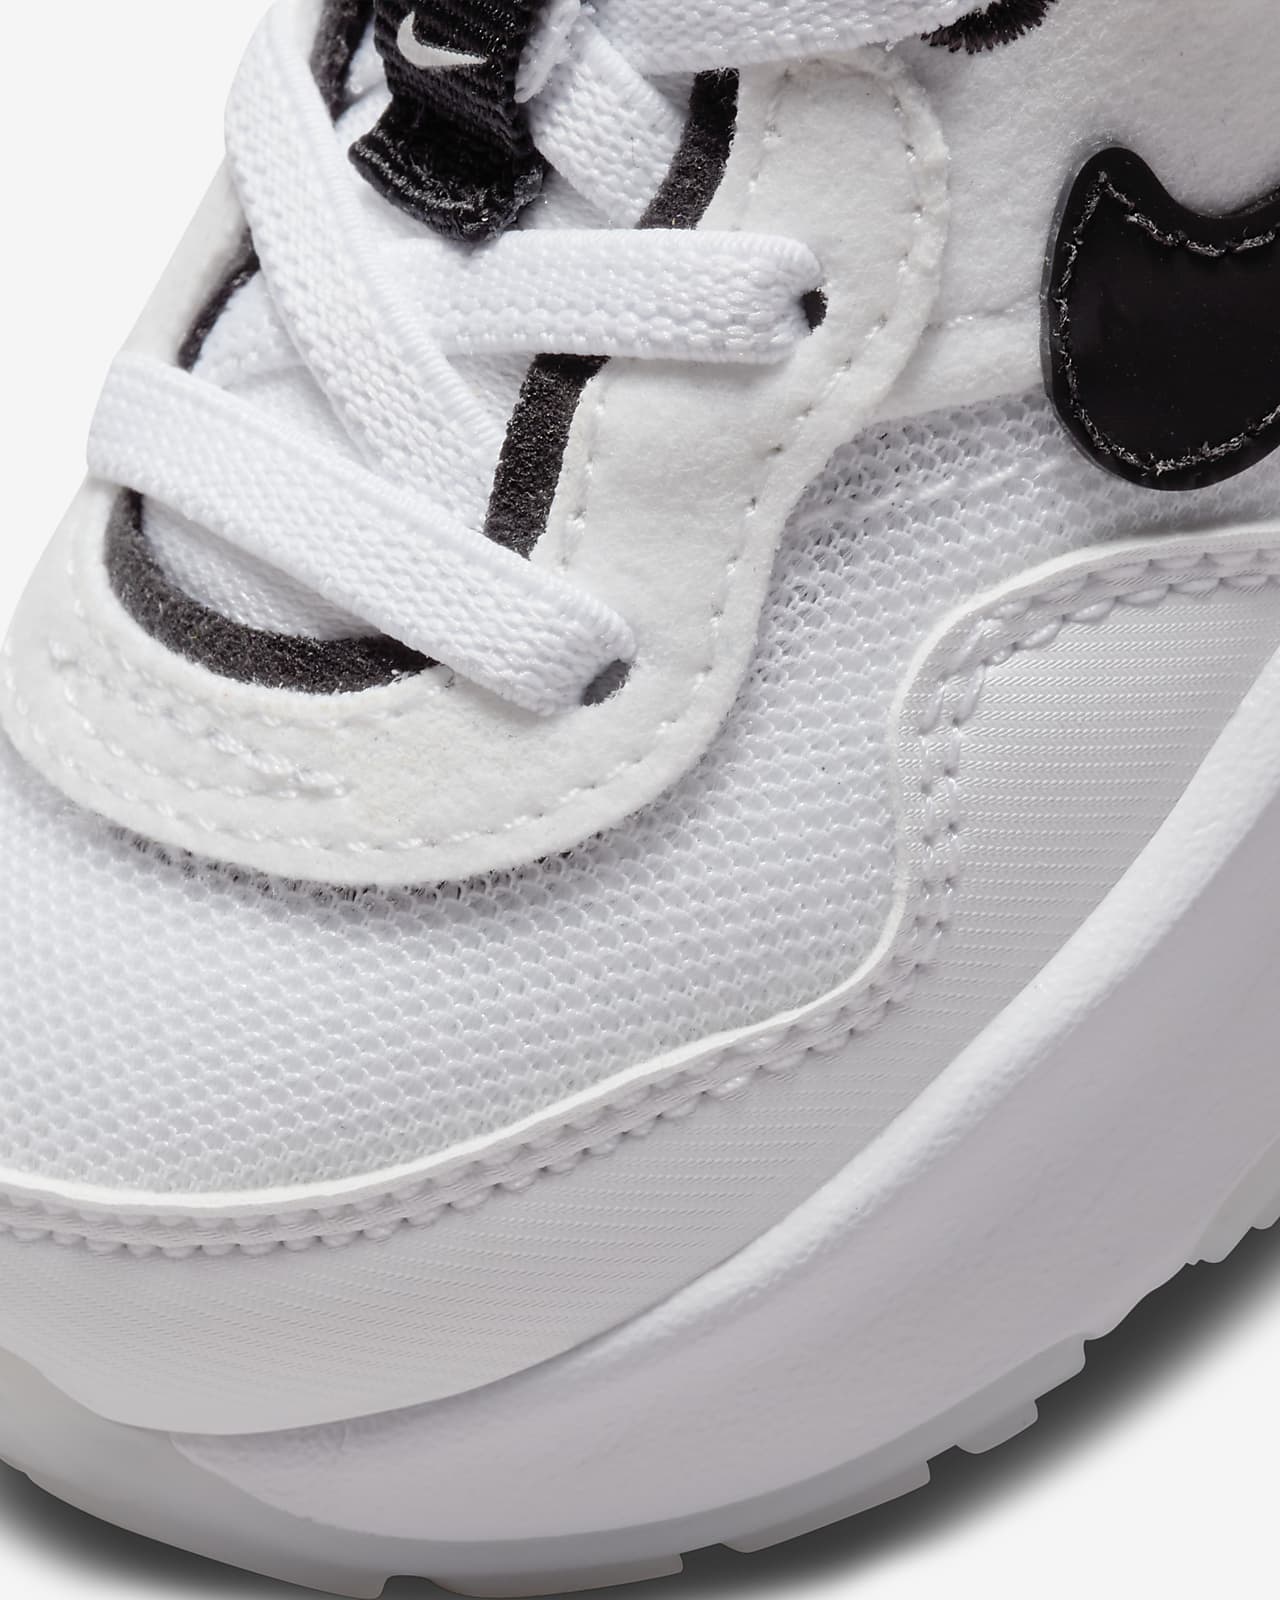 Nike Air Max Motif Shoes. Baby/Toddler